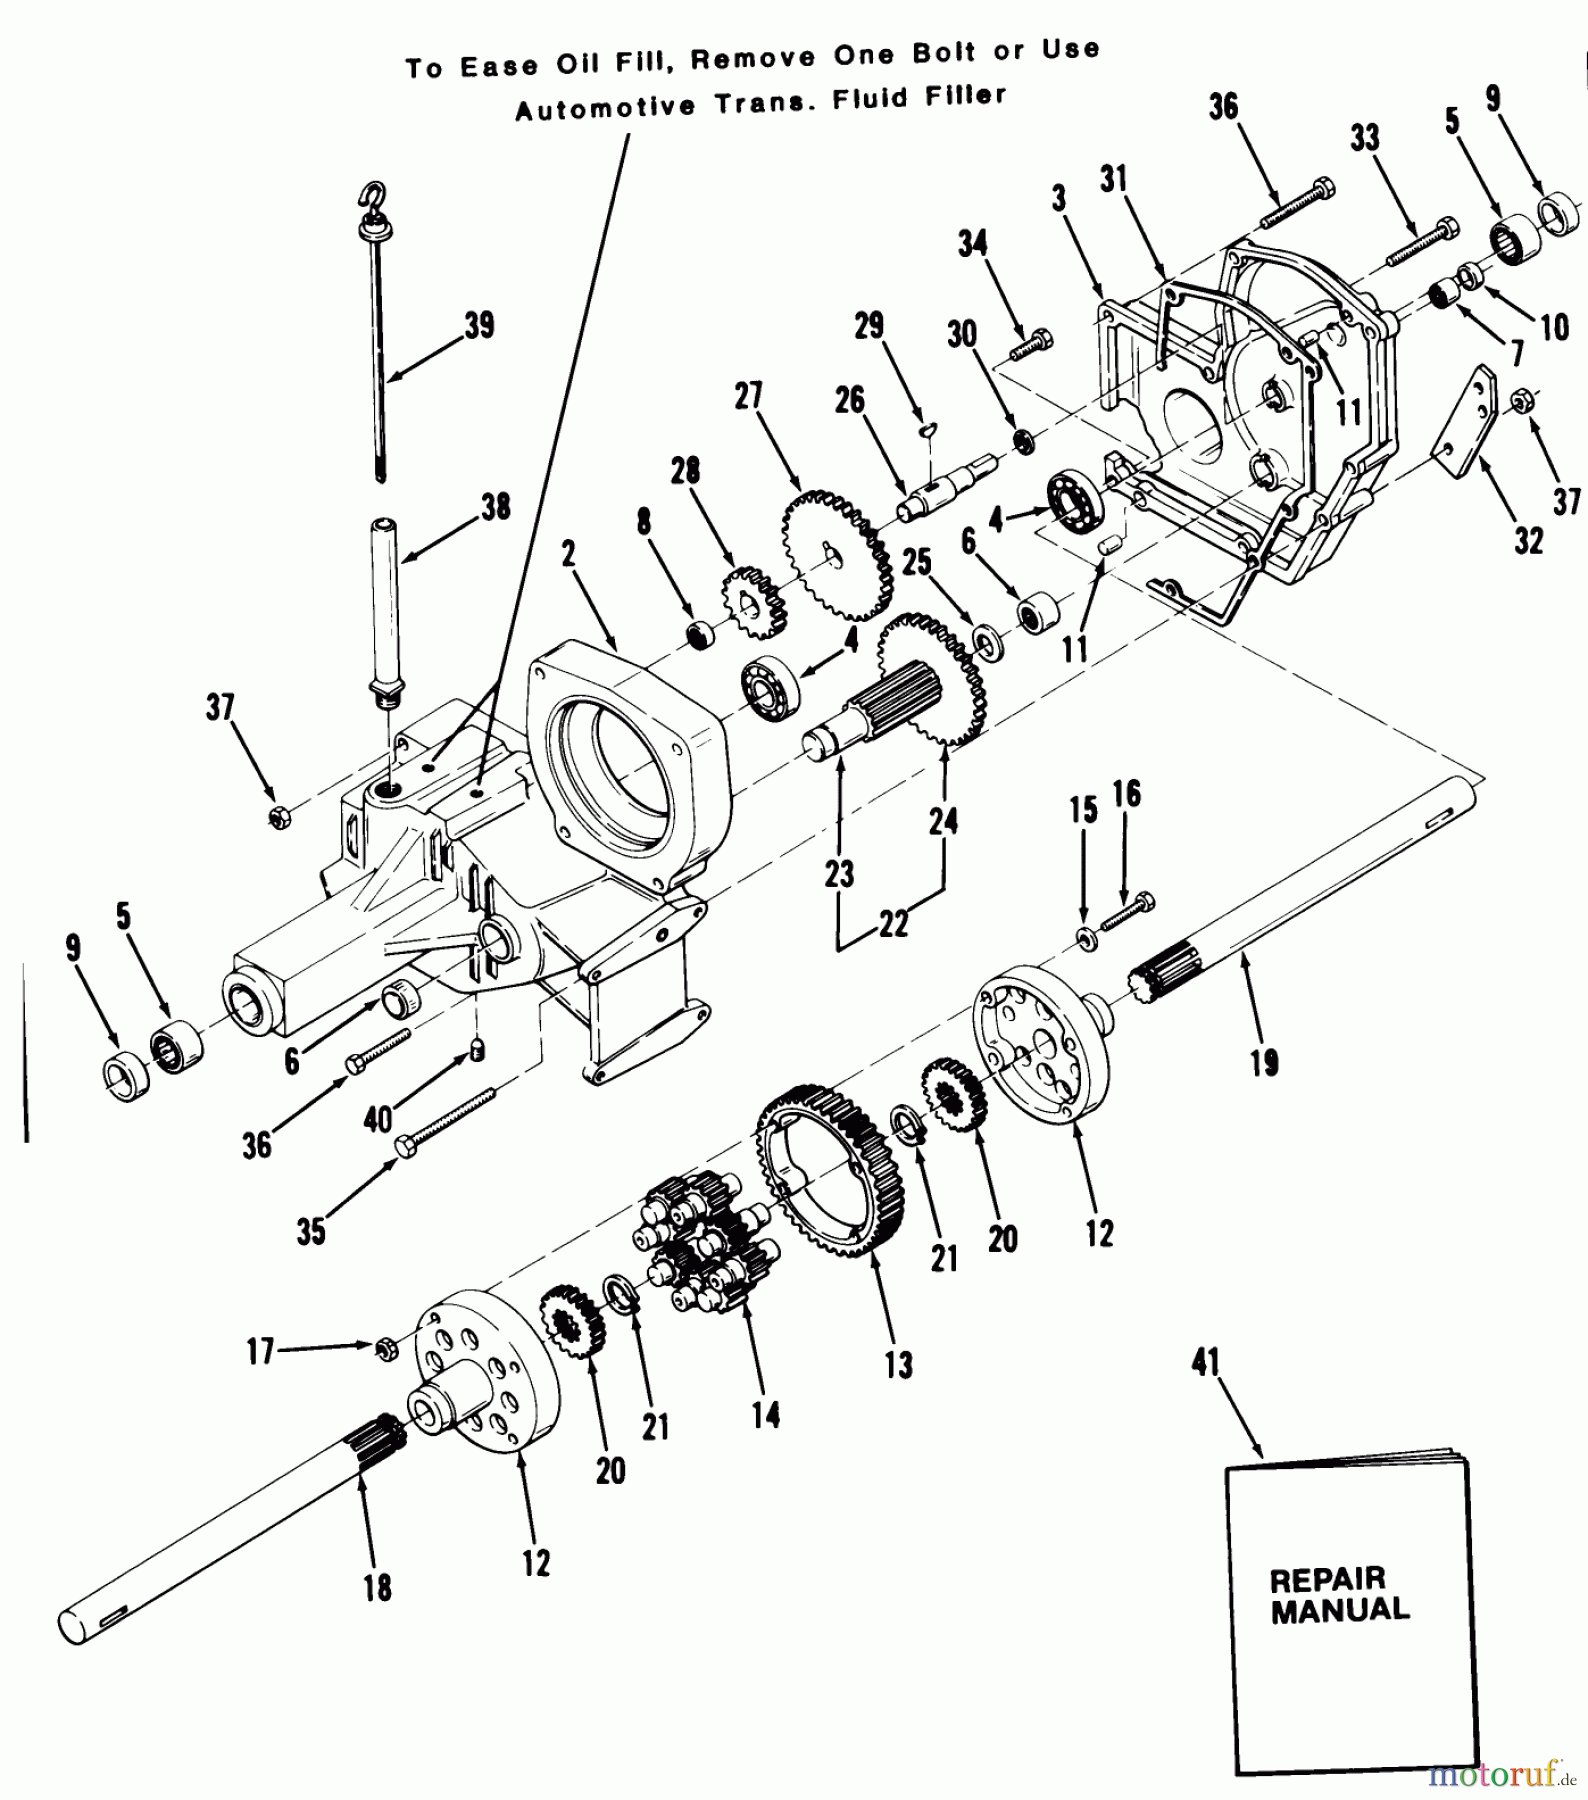  Toro Neu Mowers, Lawn & Garden Tractor Seite 1 11-12K802 (C-125) - Toro C-125 8-Speed Tractor, 1984 TRANSAXLE